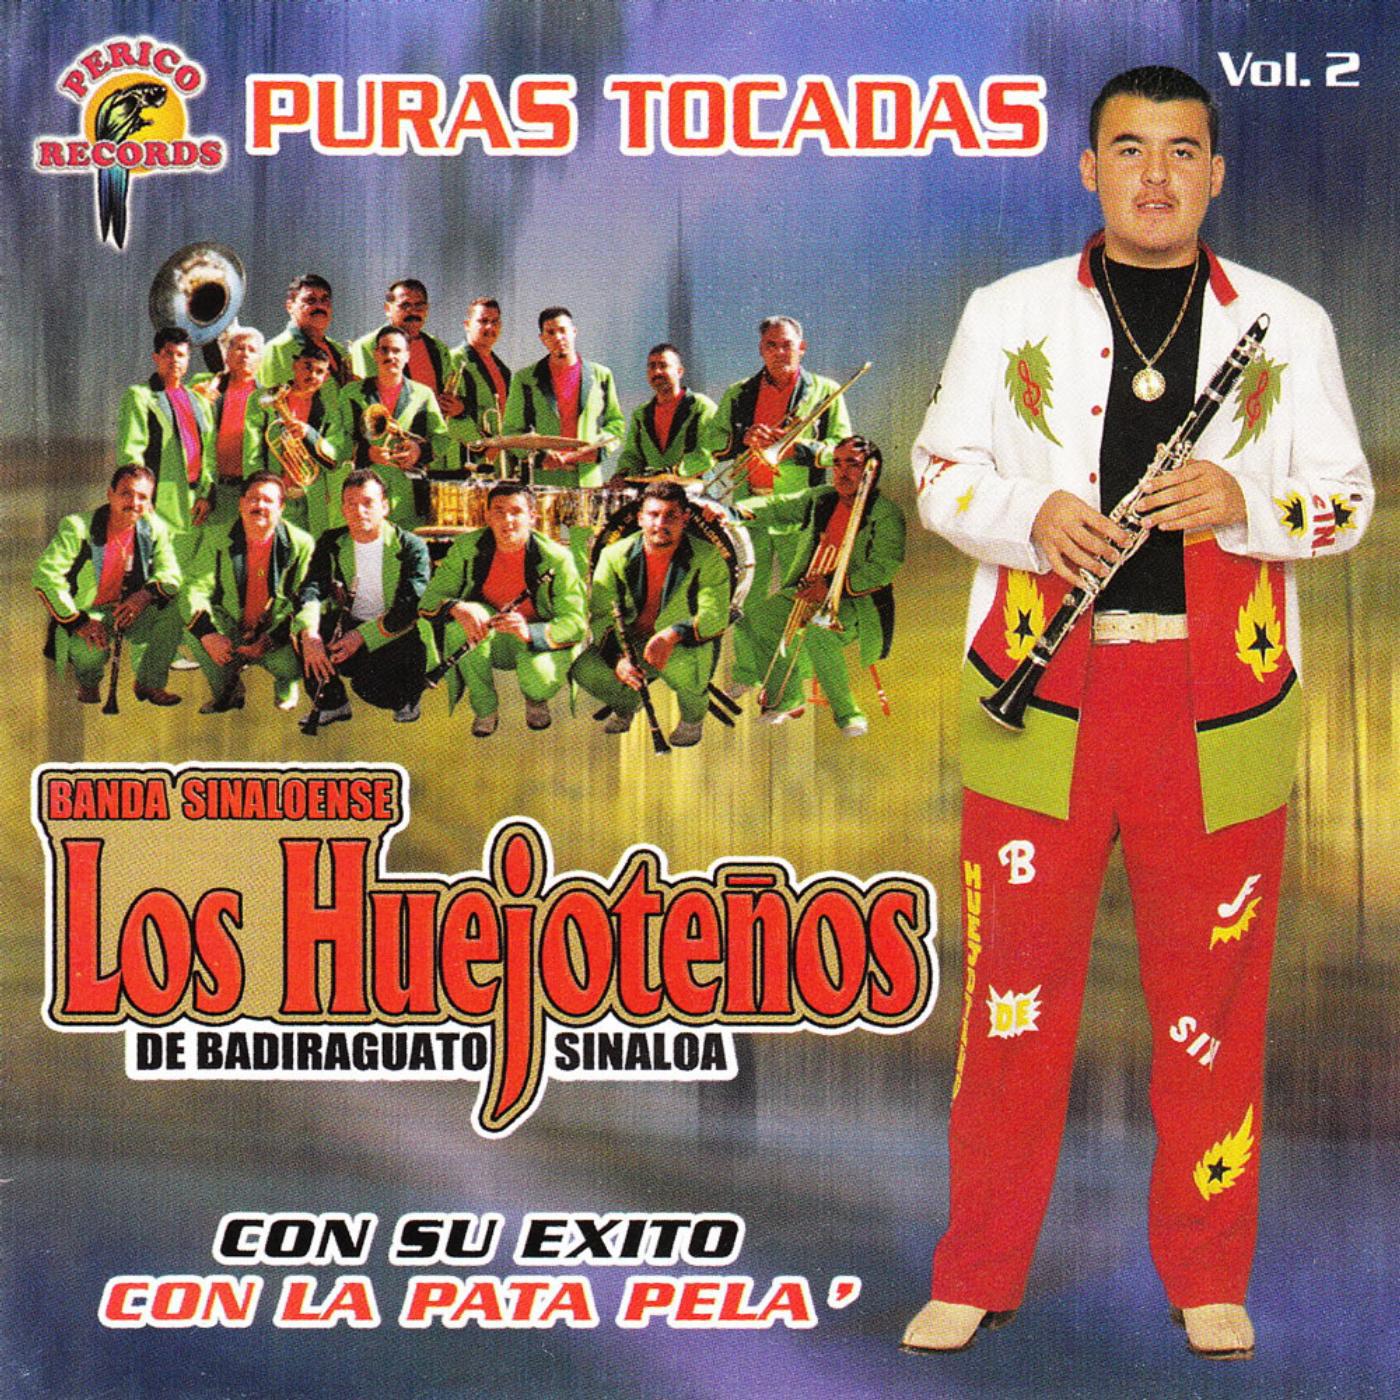 Постер альбома "Puras Tocadas Vol. 2"